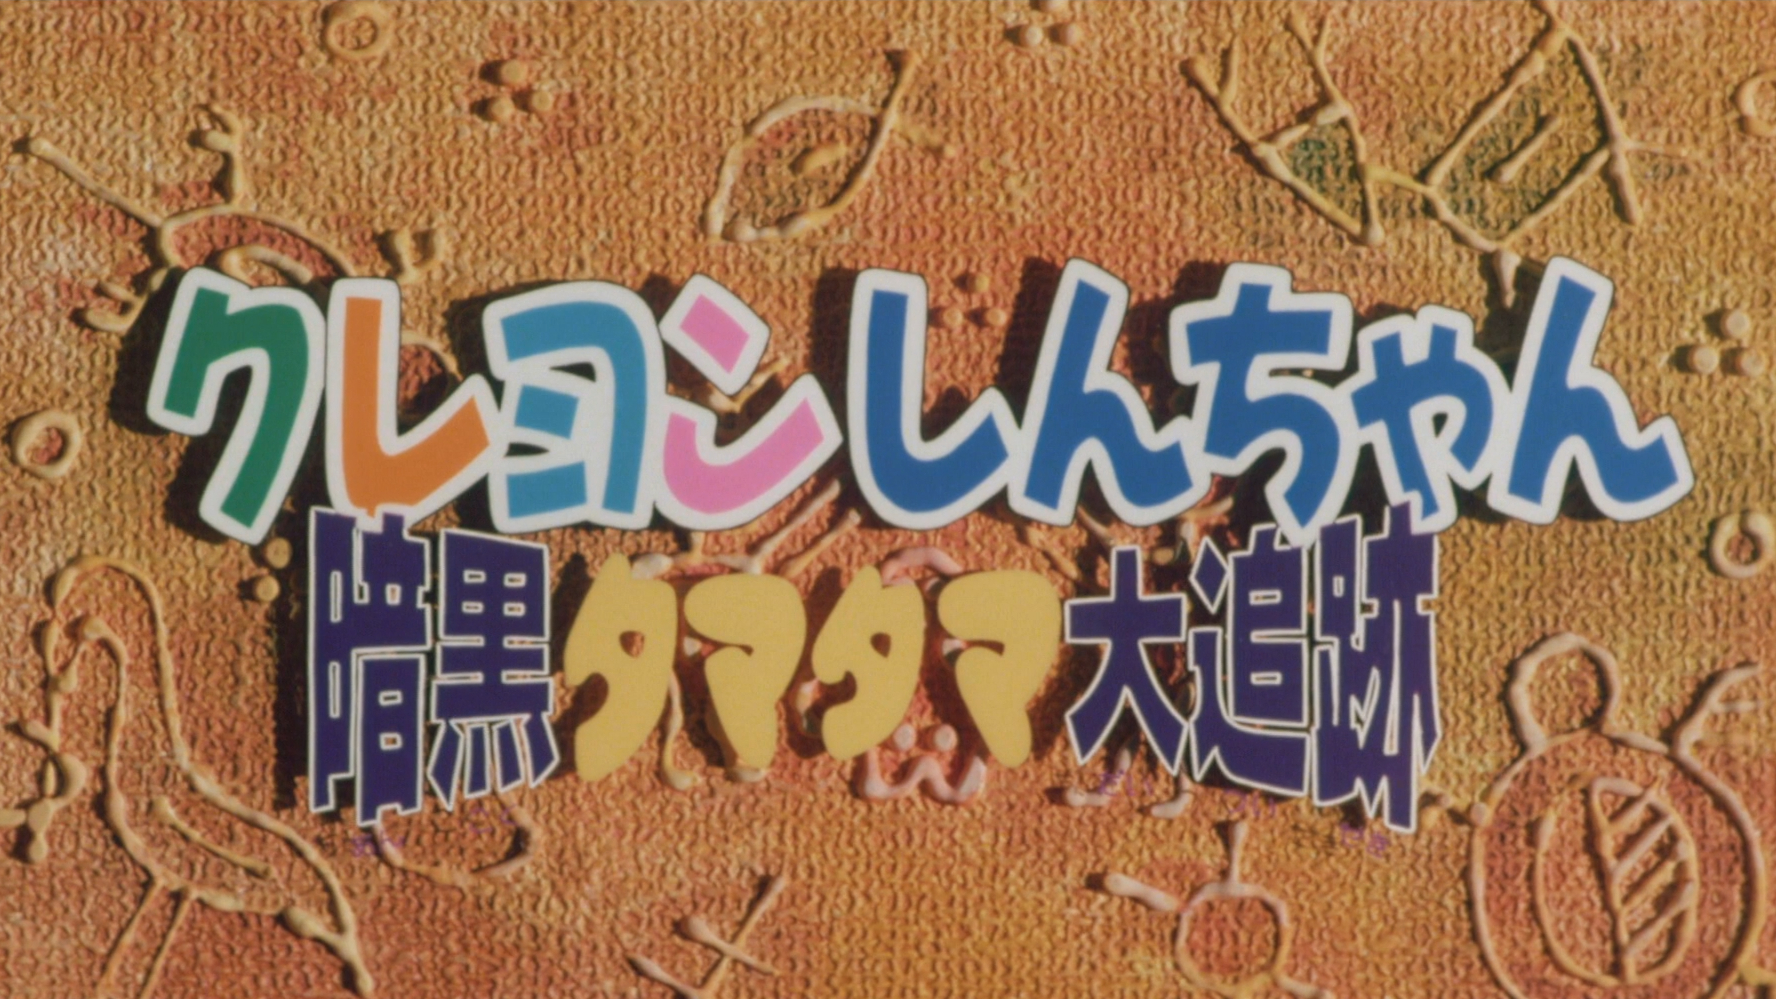 Shin - Cậu Bé Bút Chì: Cuộc Truy Đuổi Viên Ngọc Hắc Ám - クレヨンしんちゃん 暗黒タマタマ大追跡 (1997)